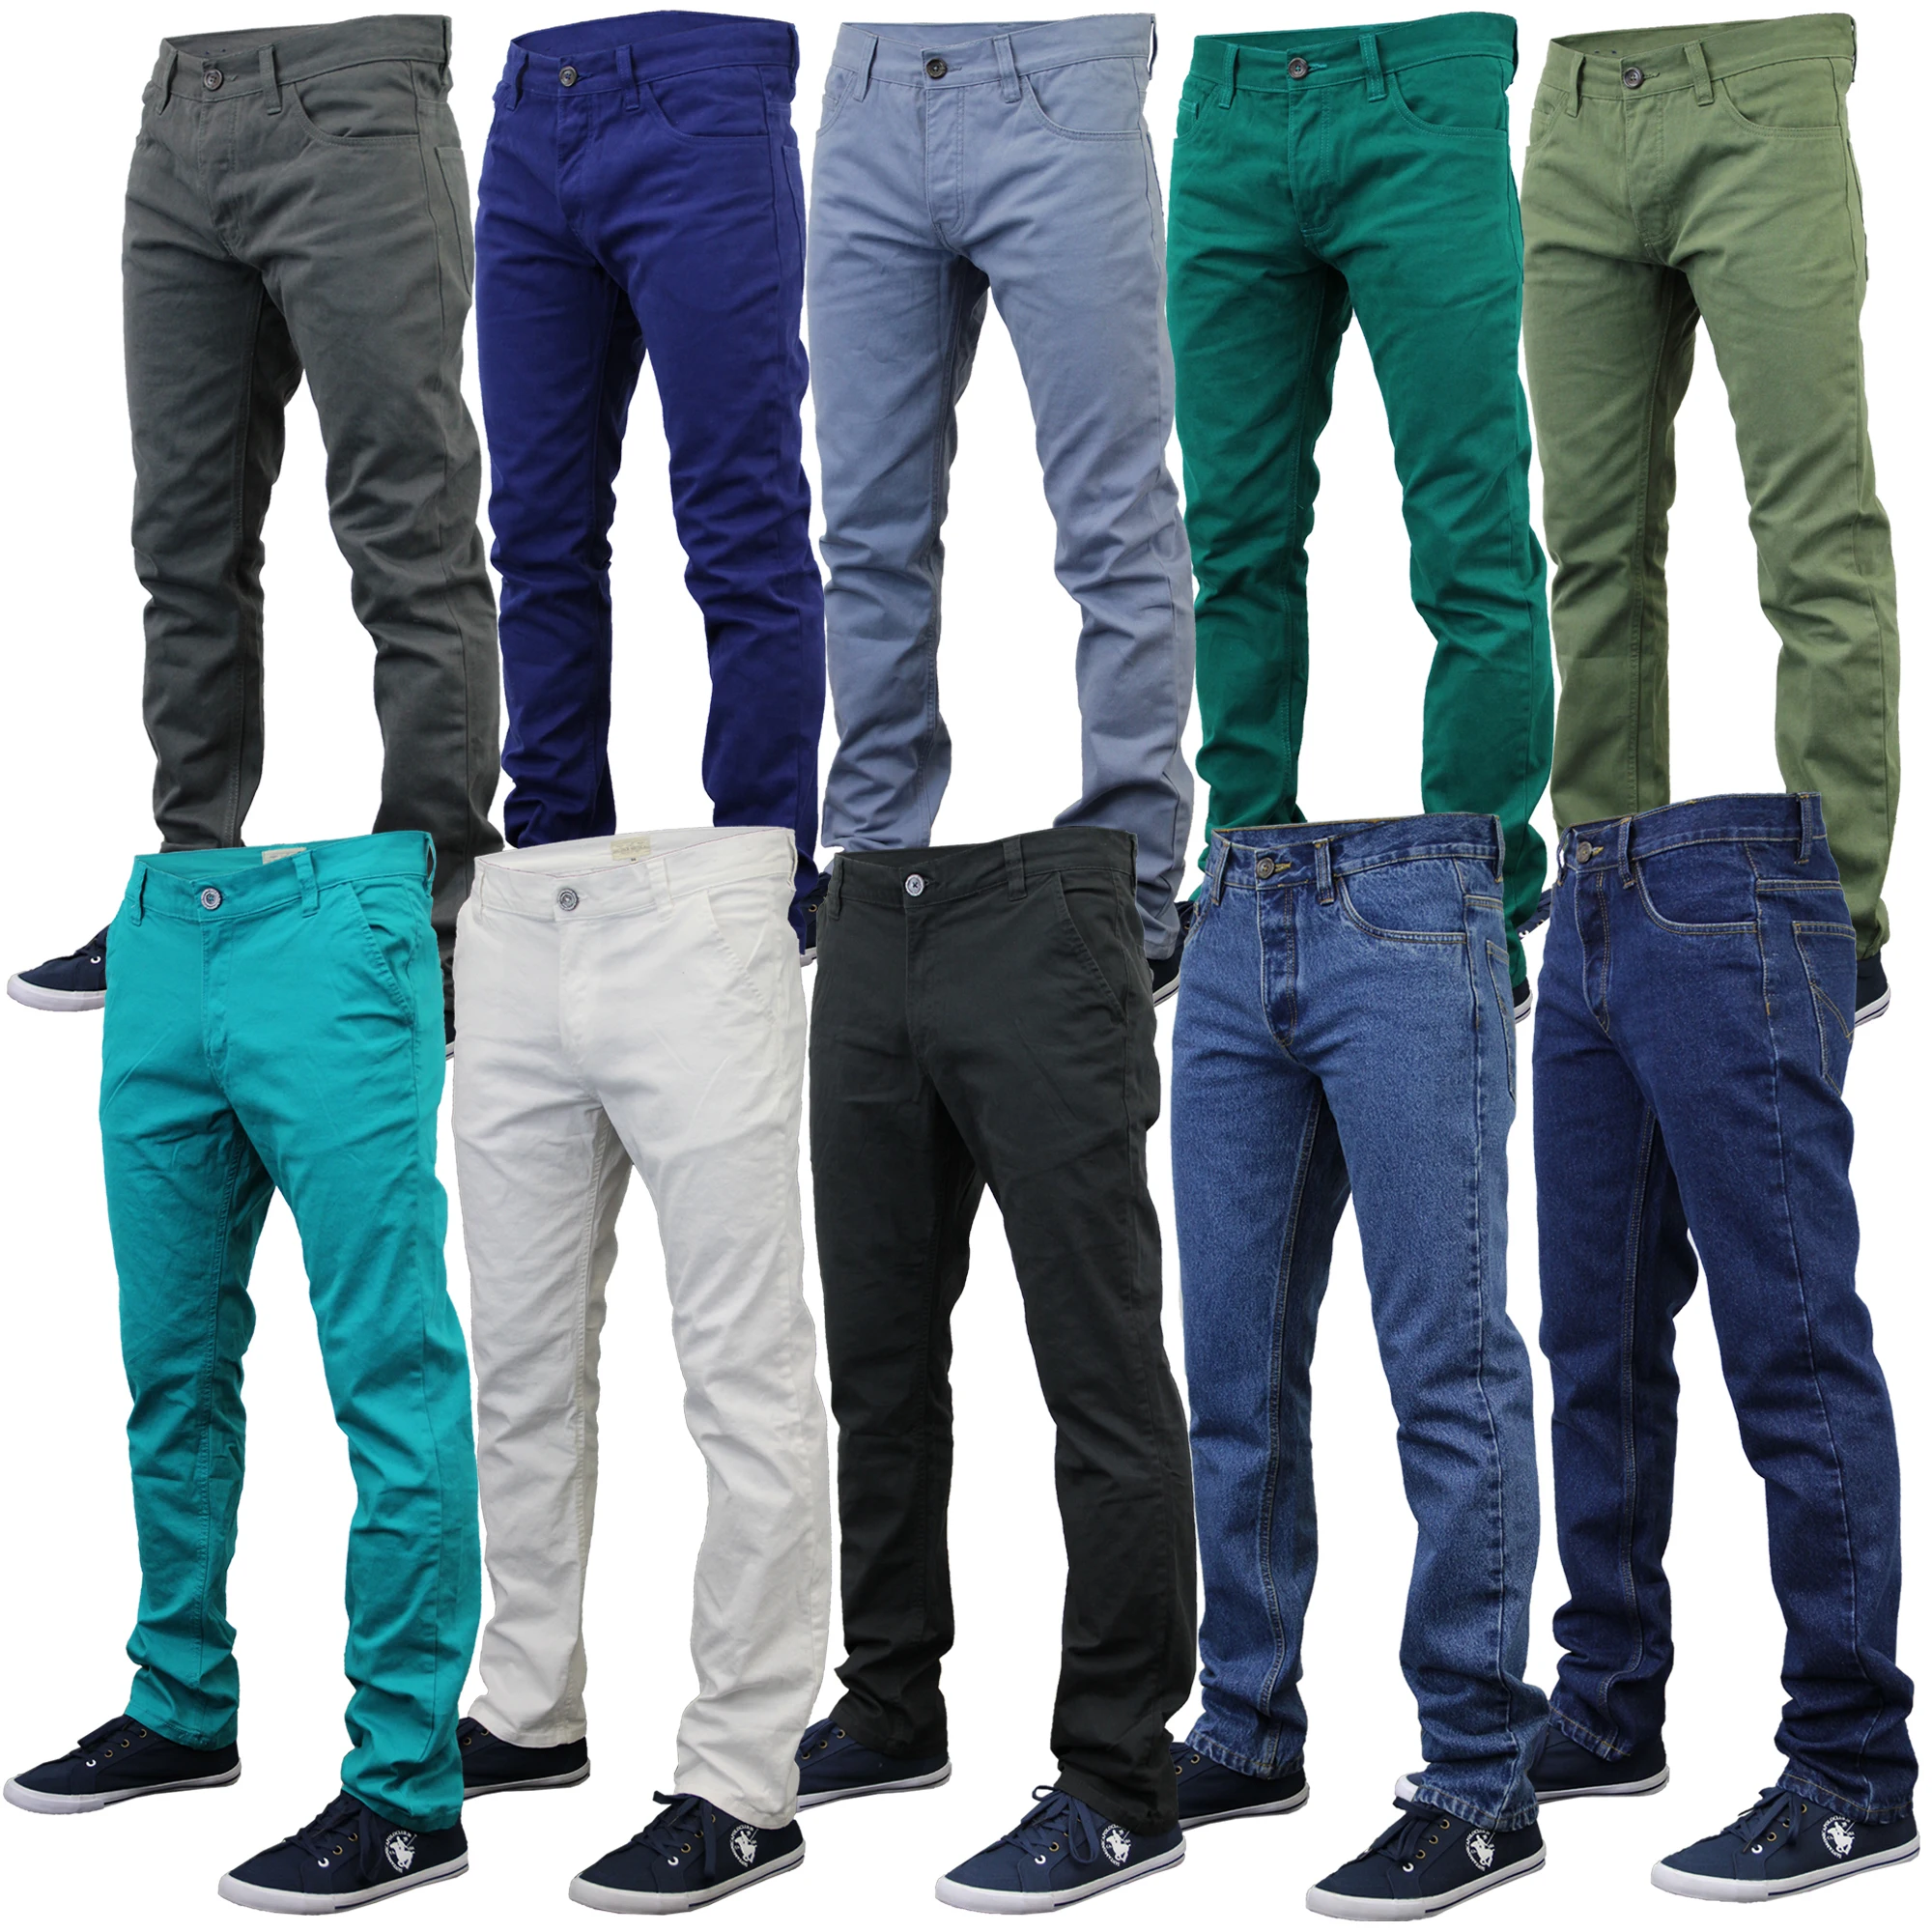 Cargo pants  Capri Pant  Branded kids wear wholesale  Branded Jeans  Shirts Paint For Boys  Girls  YouTube